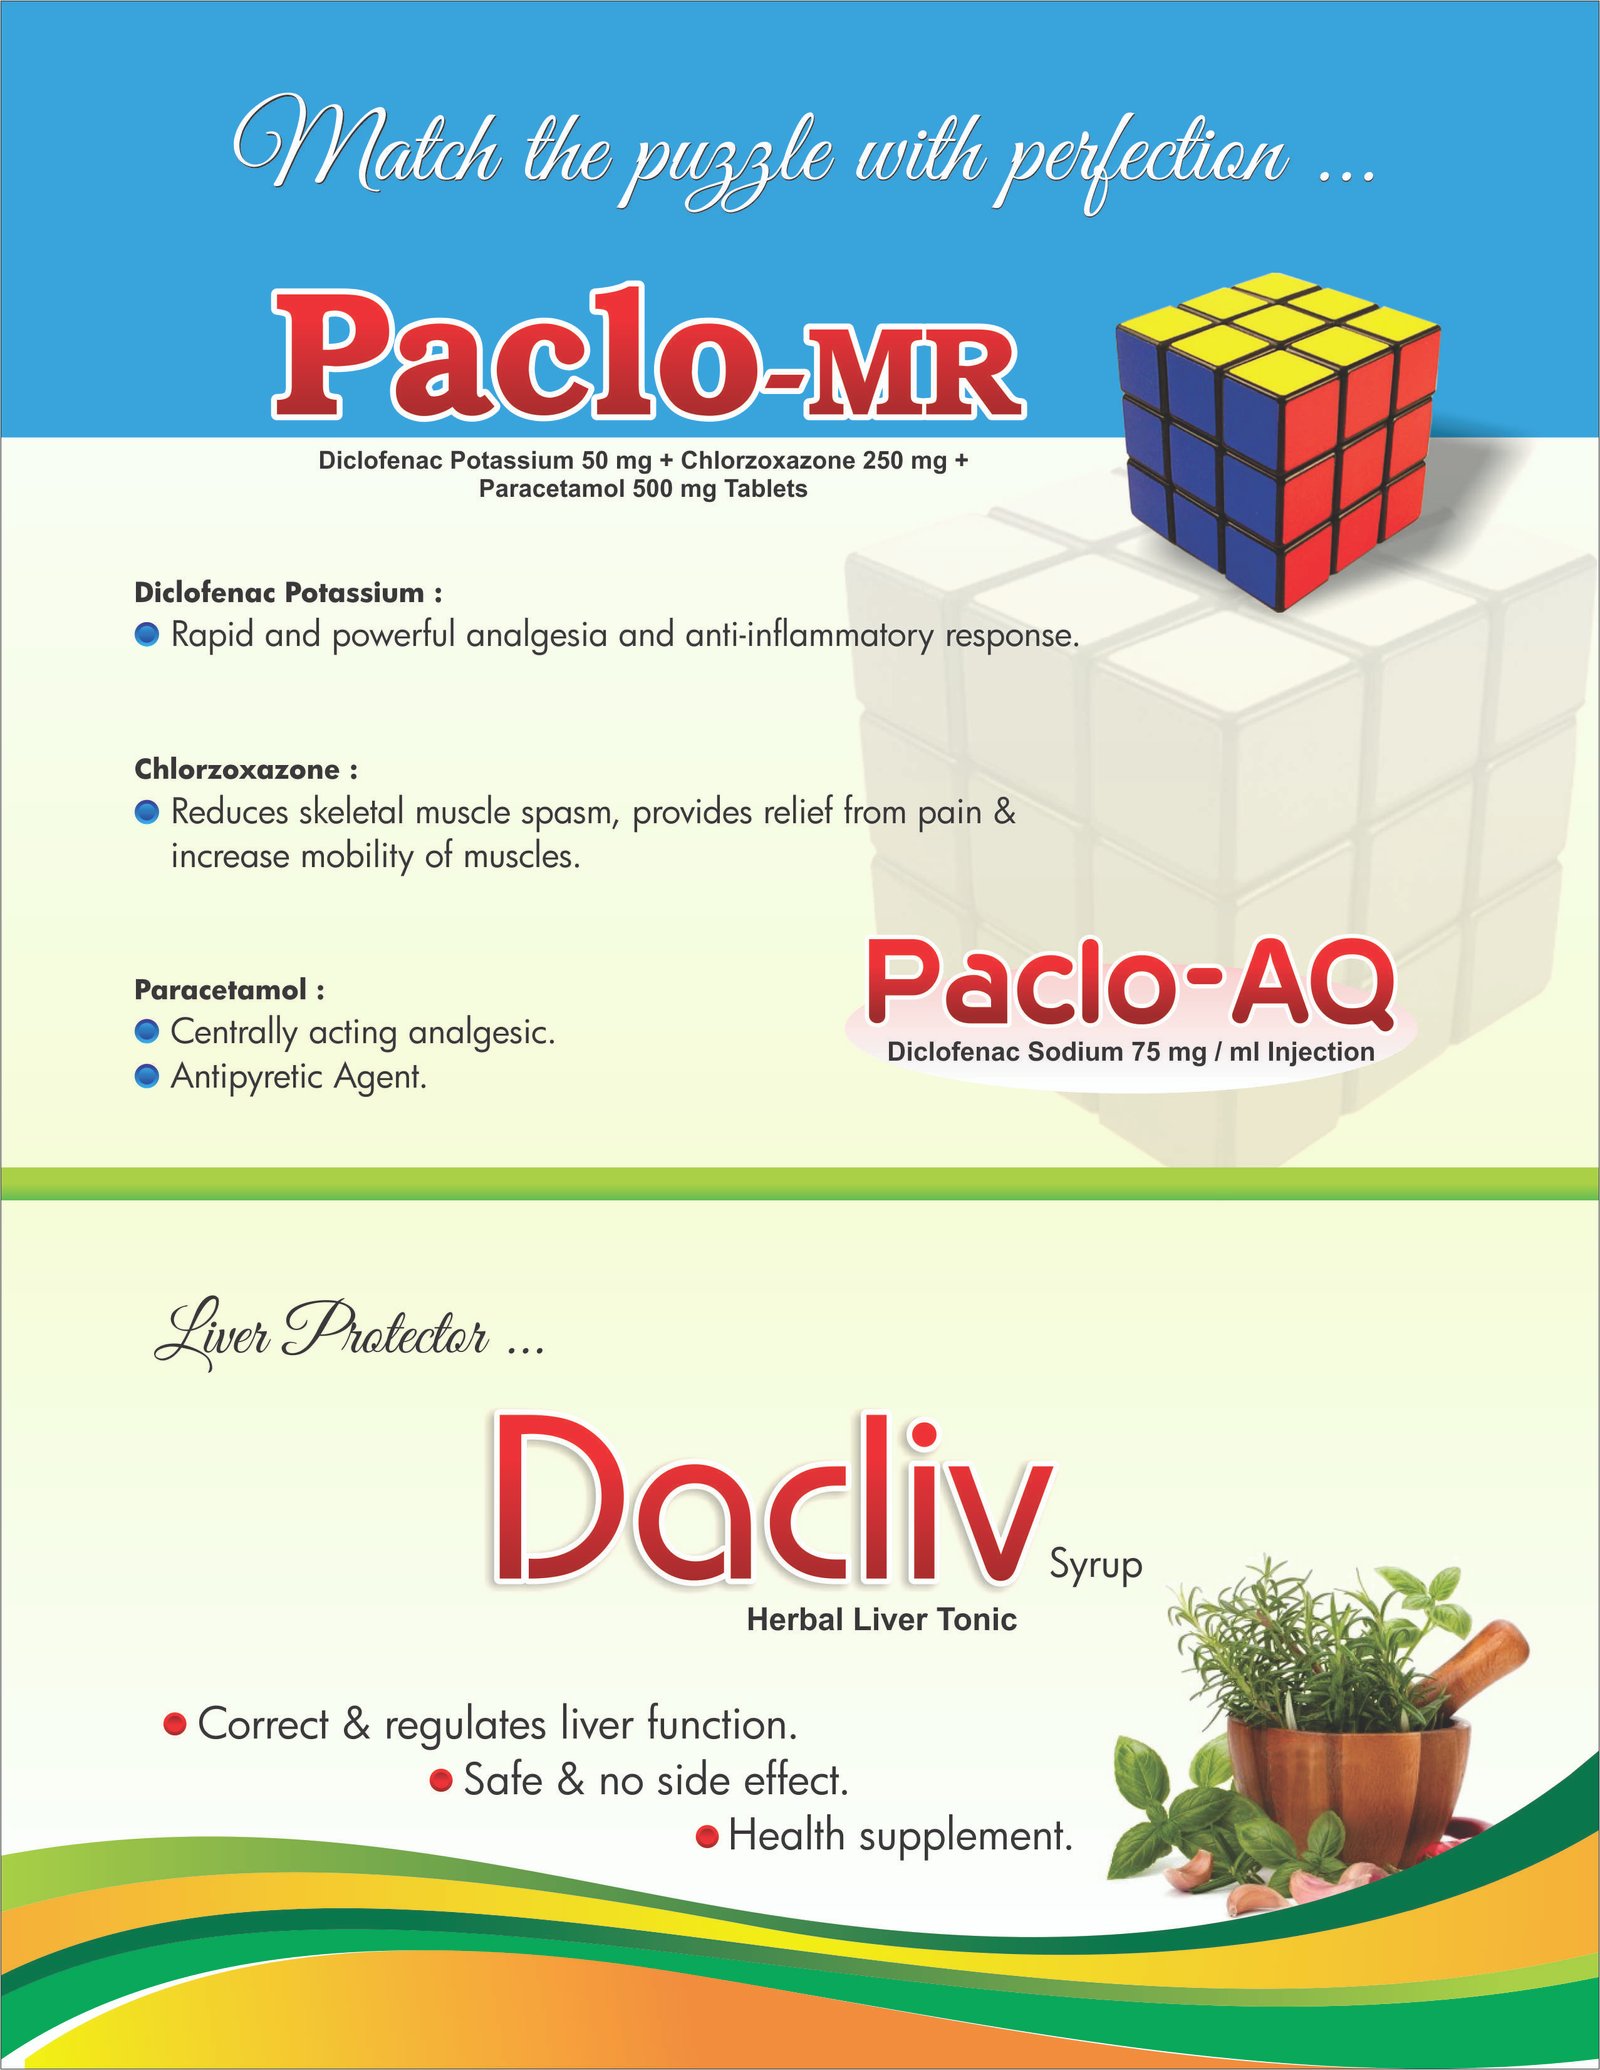 paclo, dacliv, dakshpharma, daksh pharmaceuticals panchkula, pcd franchise, pharma franchise, central nervous system